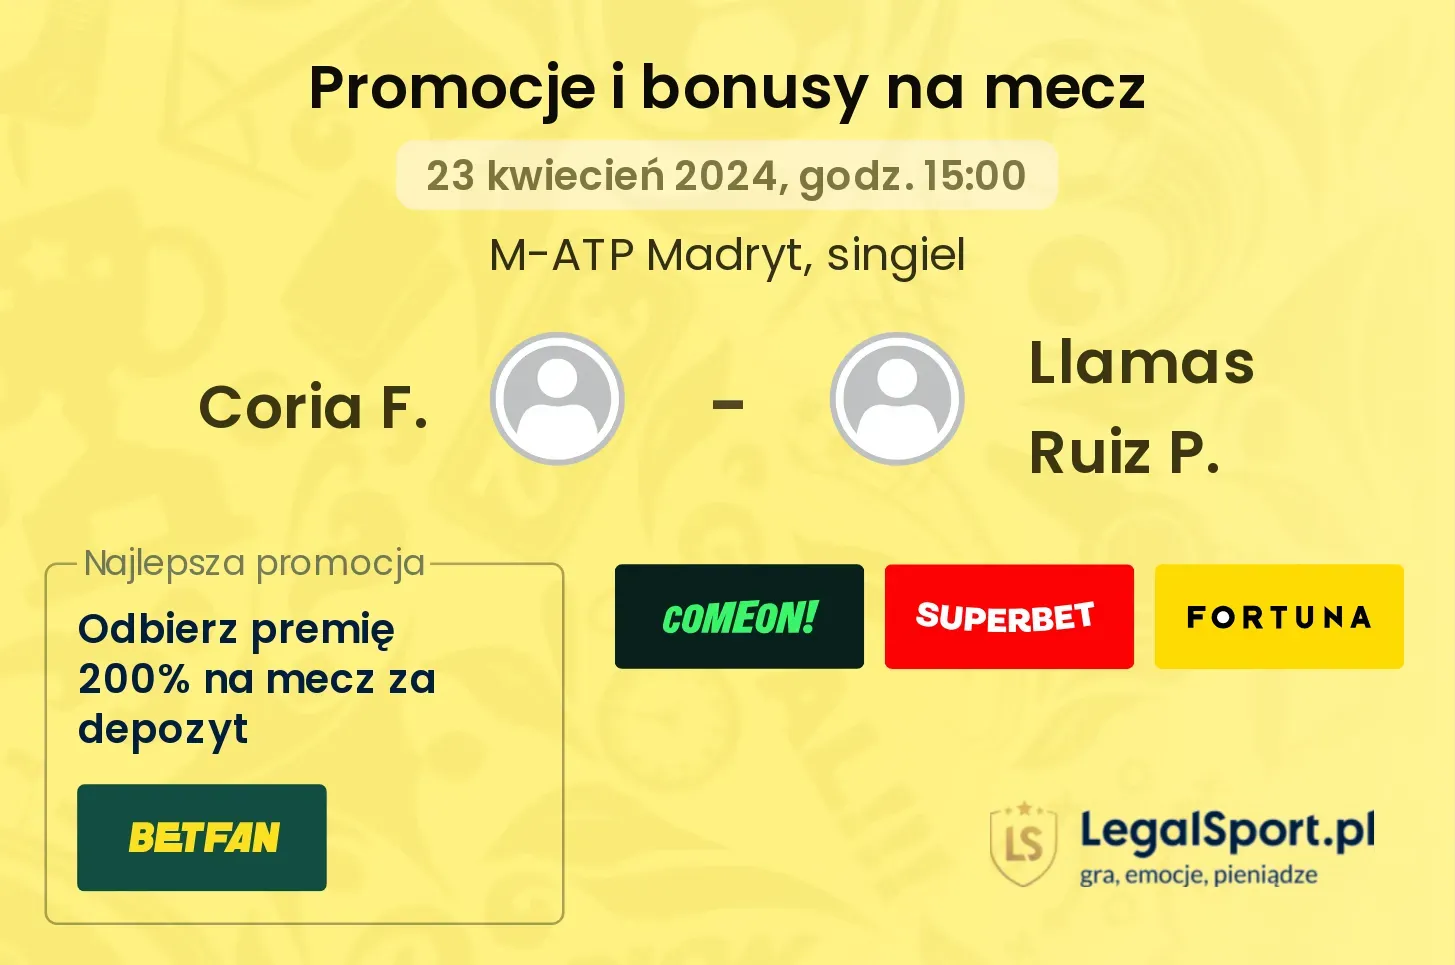 Coria F. - Llamas Ruiz P. promocje bonusy na mecz